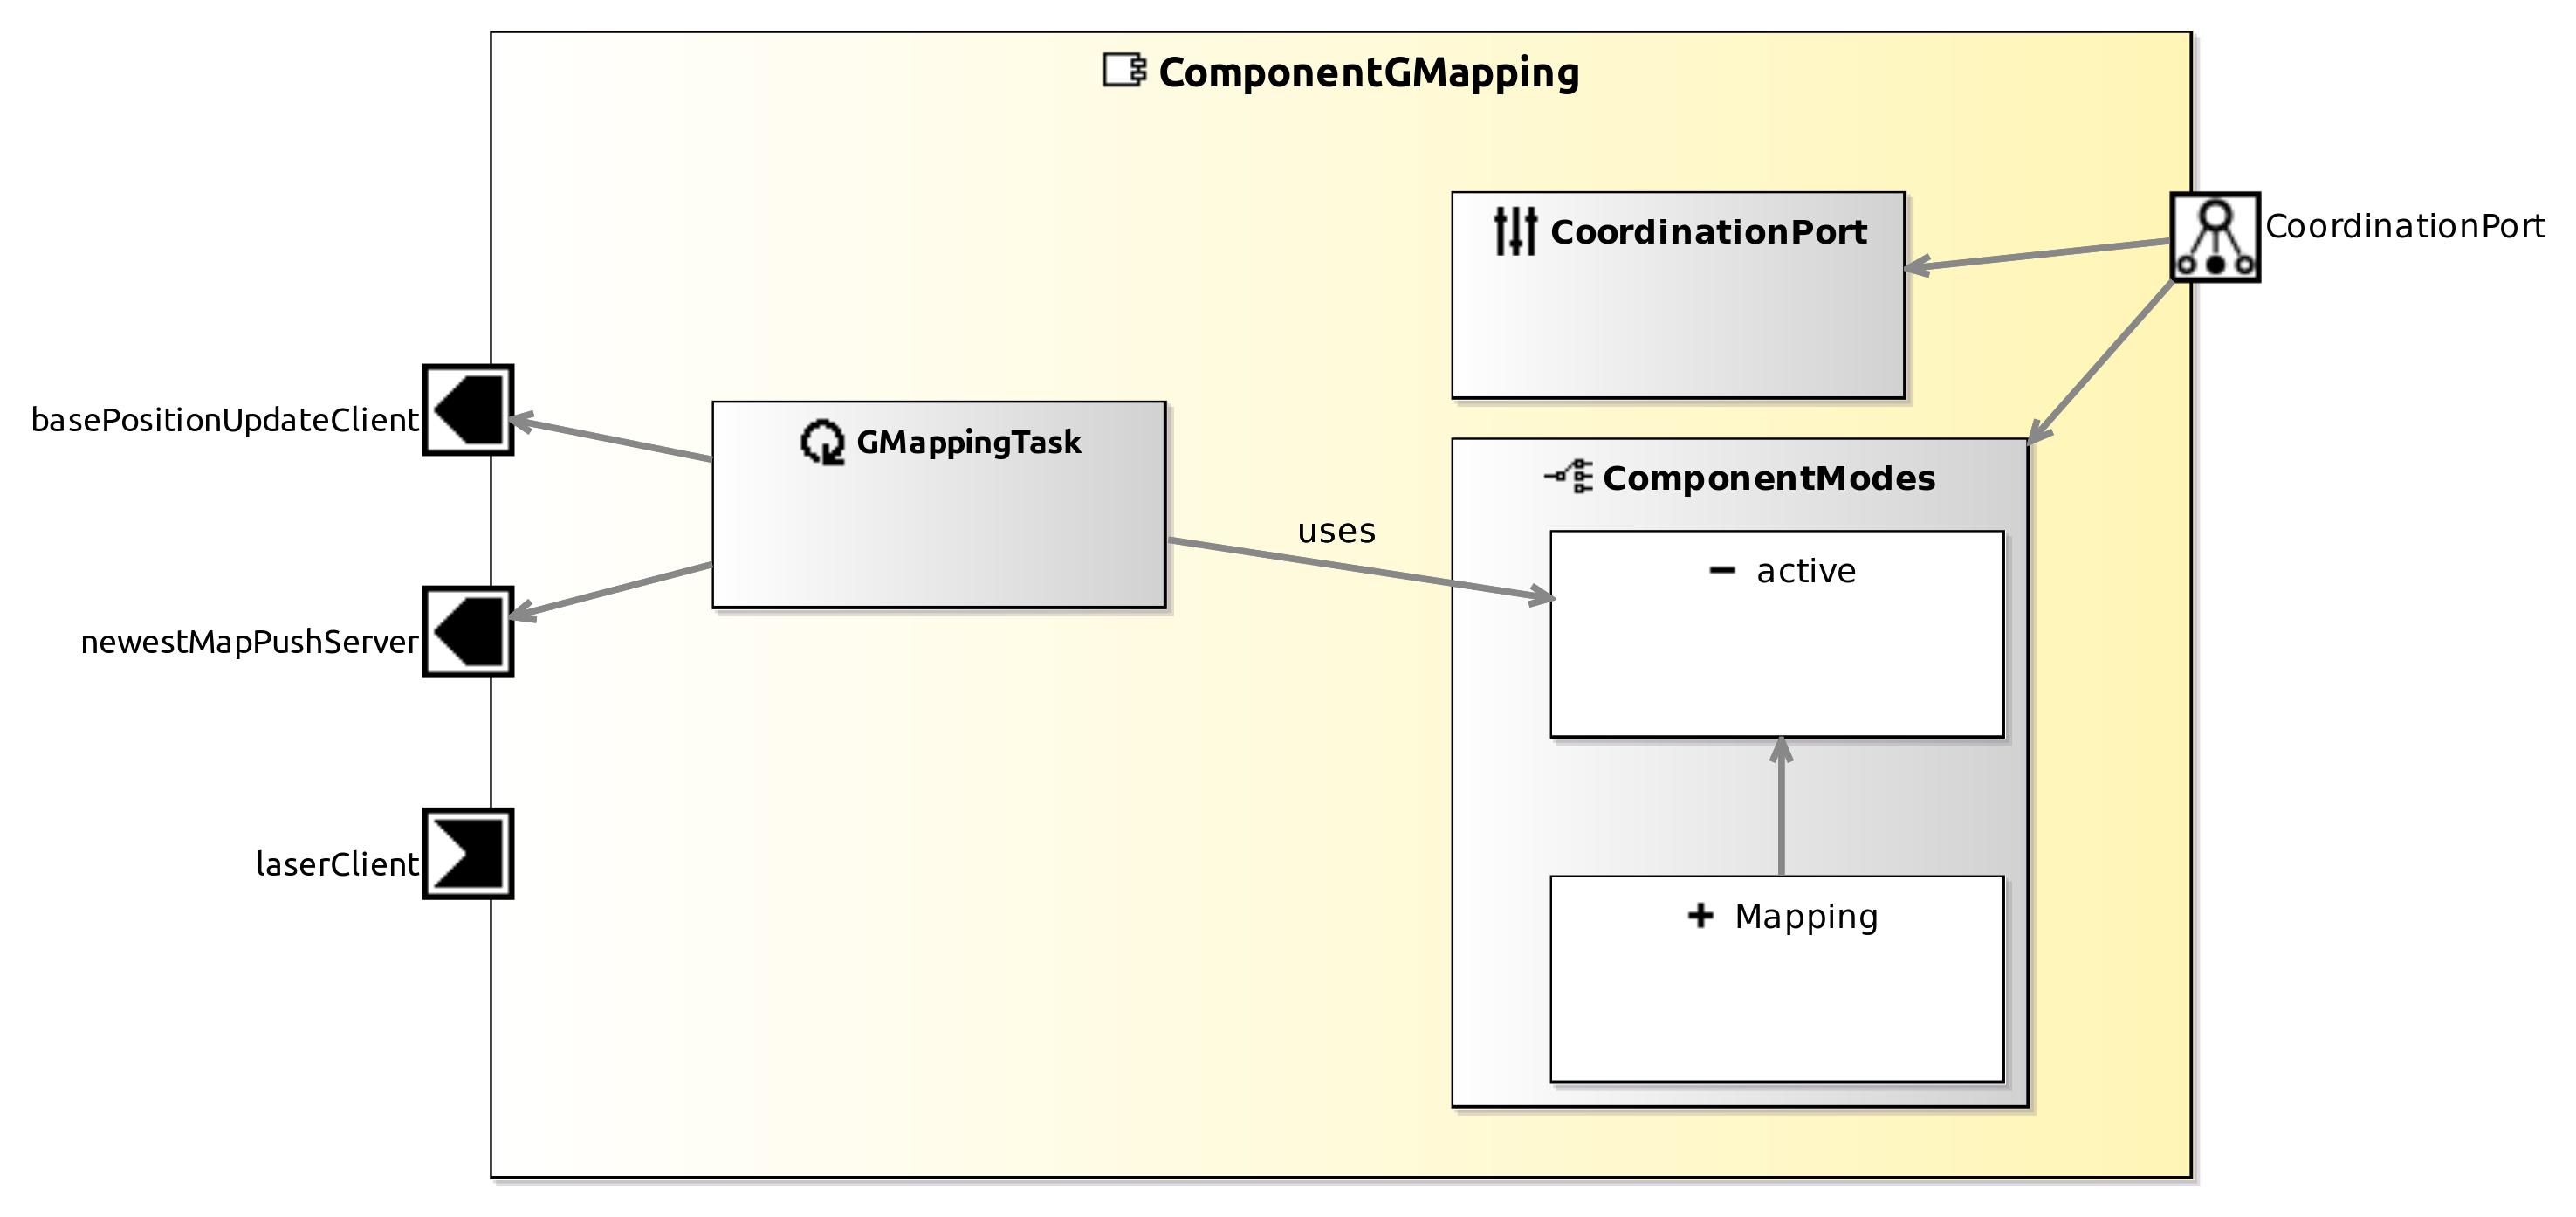 raw.githubusercontent.com_servicerobotics-ulm_componentrepository_master_componentgmapping_model_componentgmappingcomponentdefinition.jpg